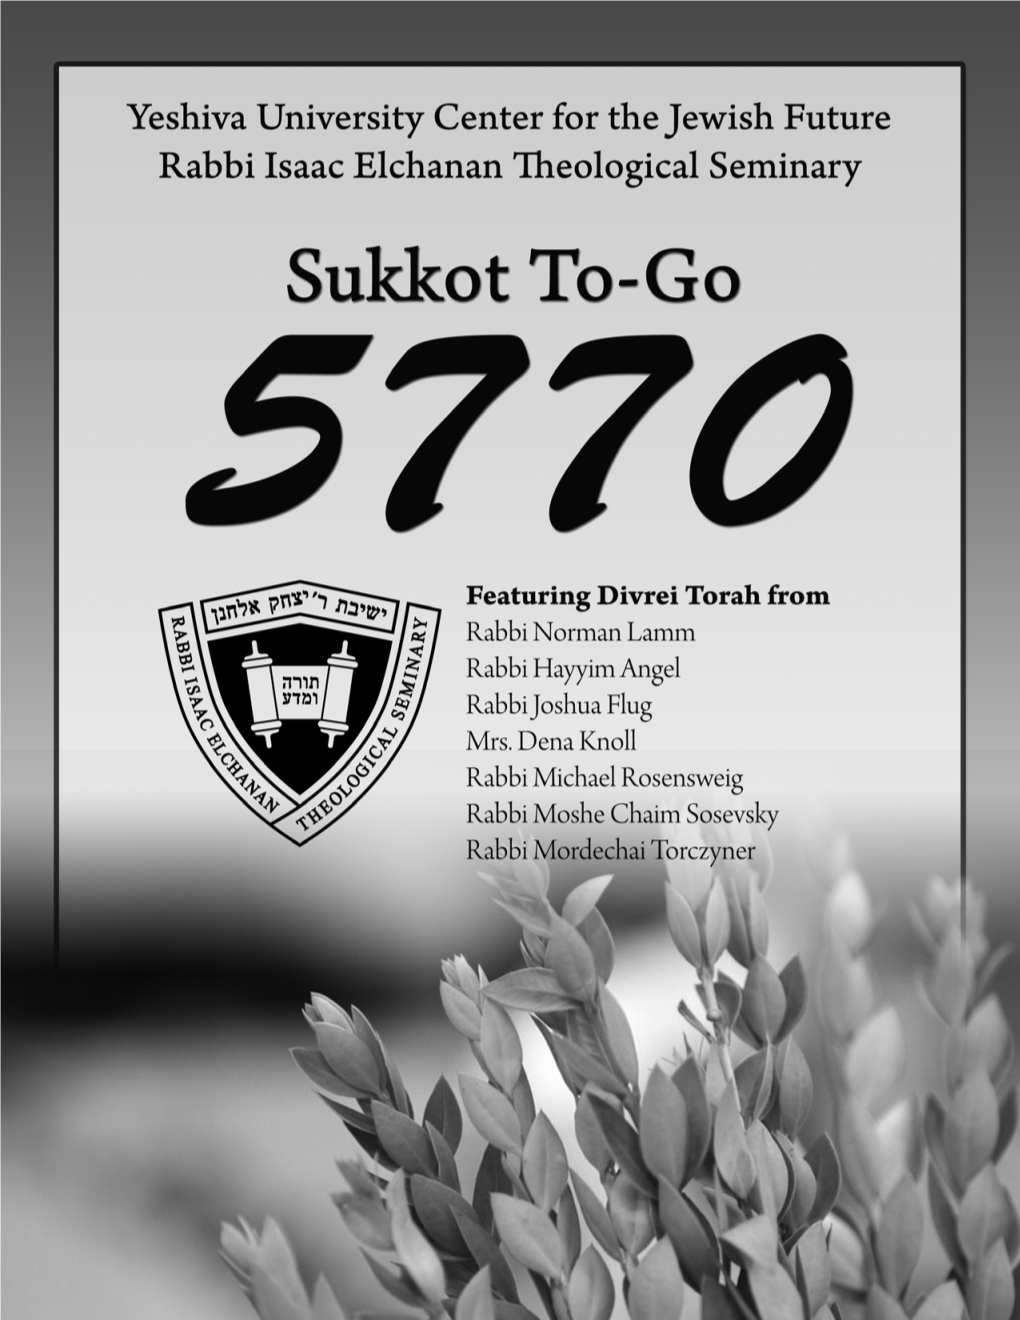 Yeshiva University • Sukkot To-Go • Tishrei 5770